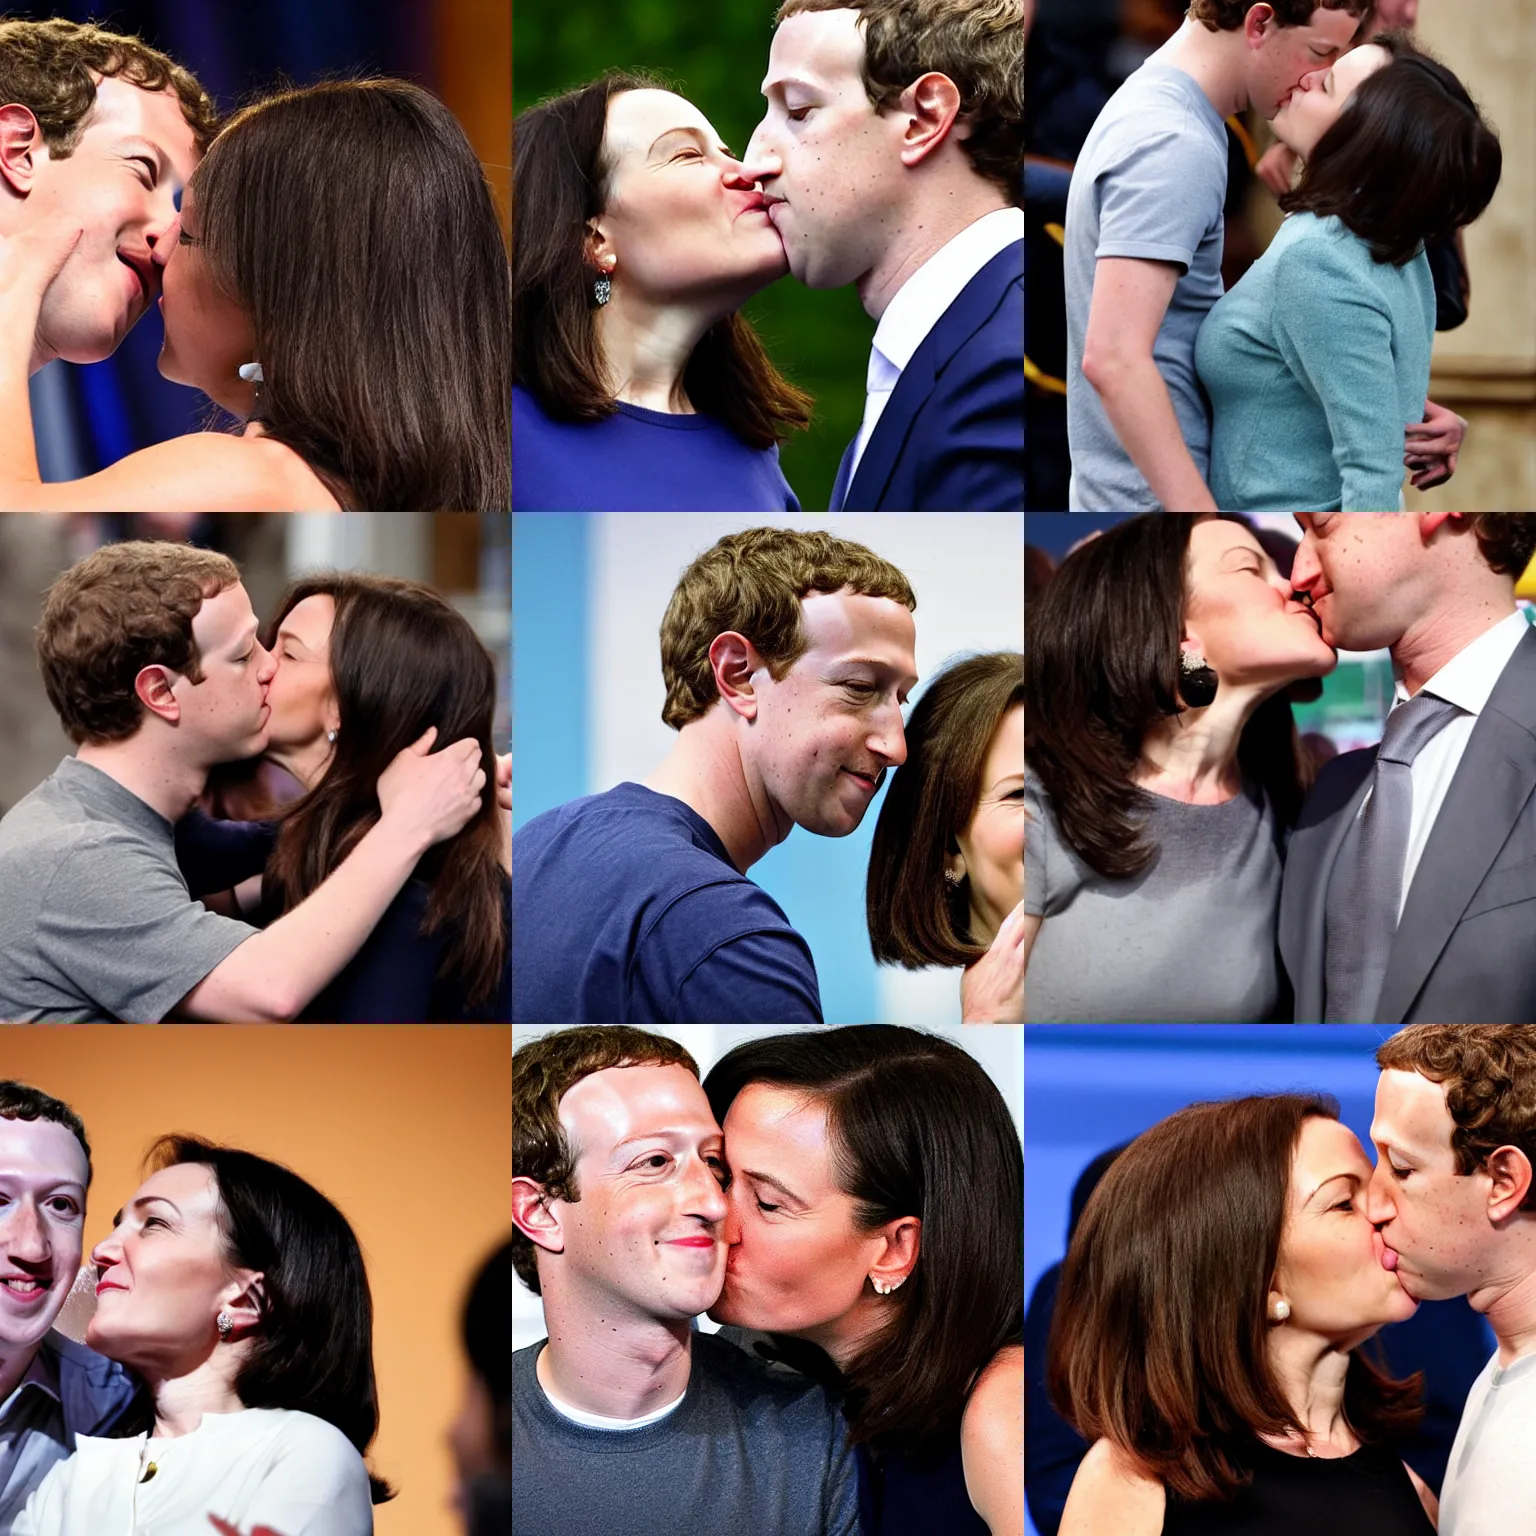 Prompt: Mark Zuckerberg and Sheryl Sandberg kissing